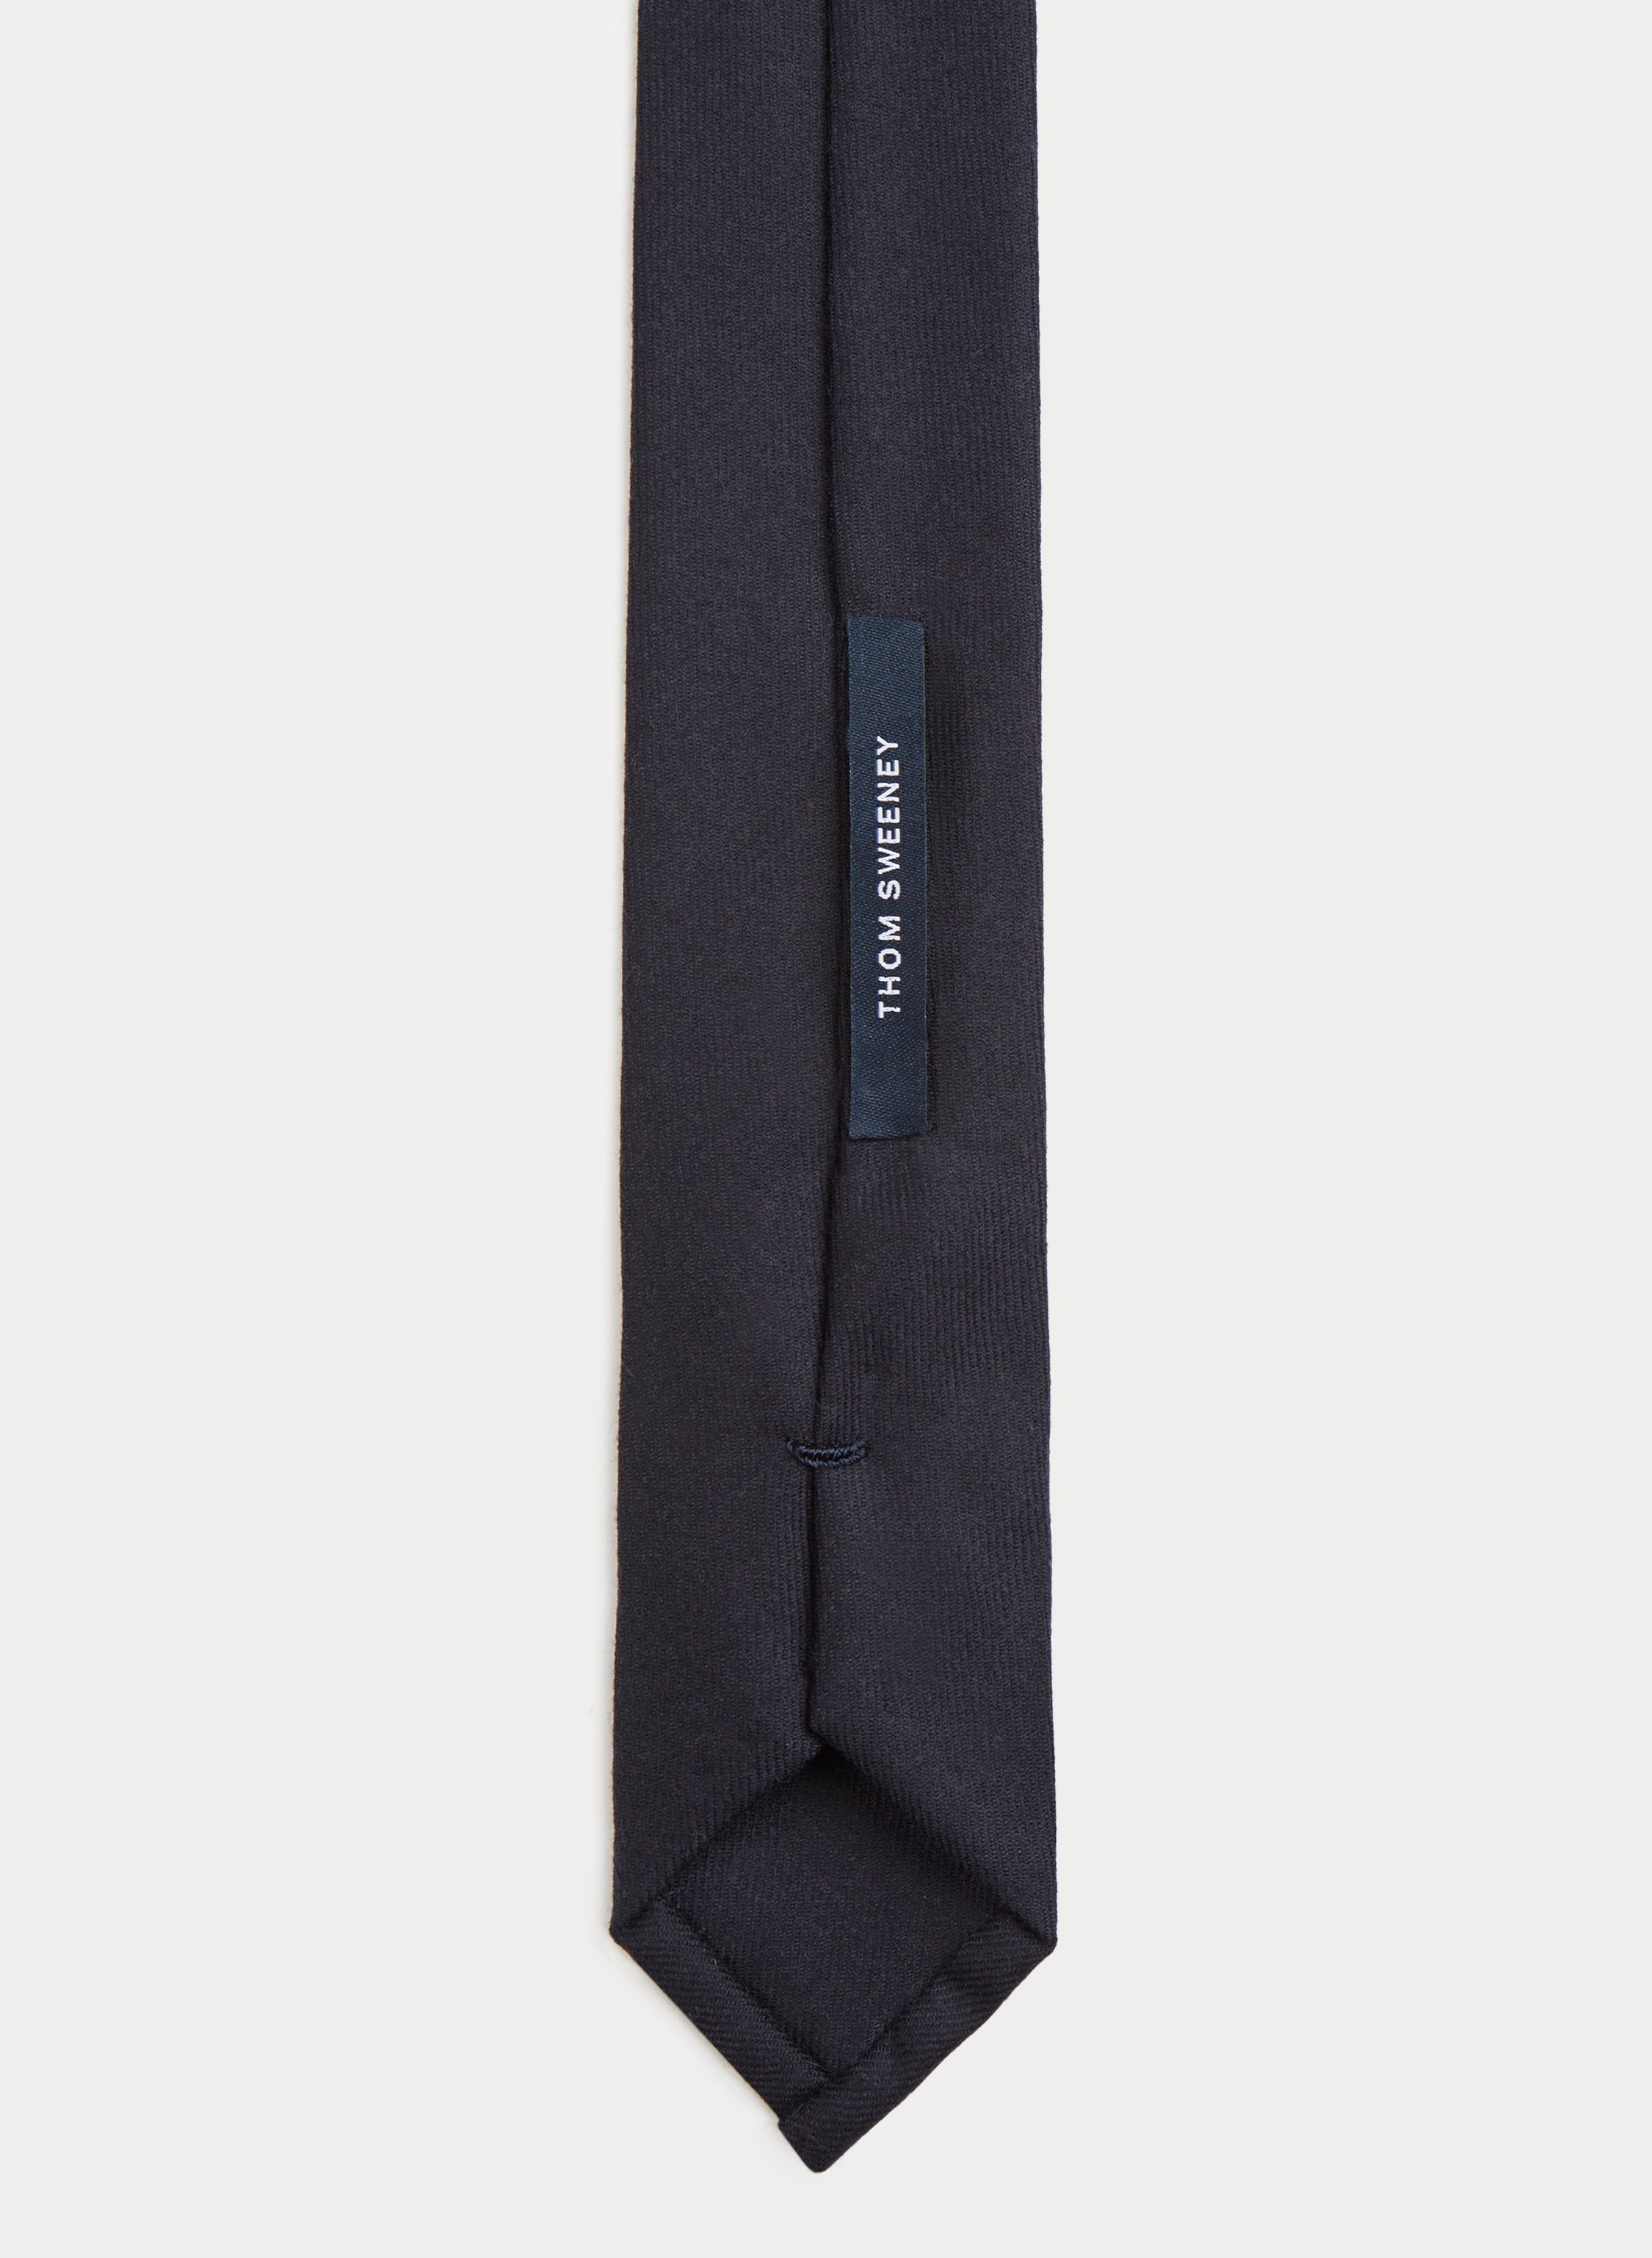 Wool Tie Darkest Navy Product Image Reverse